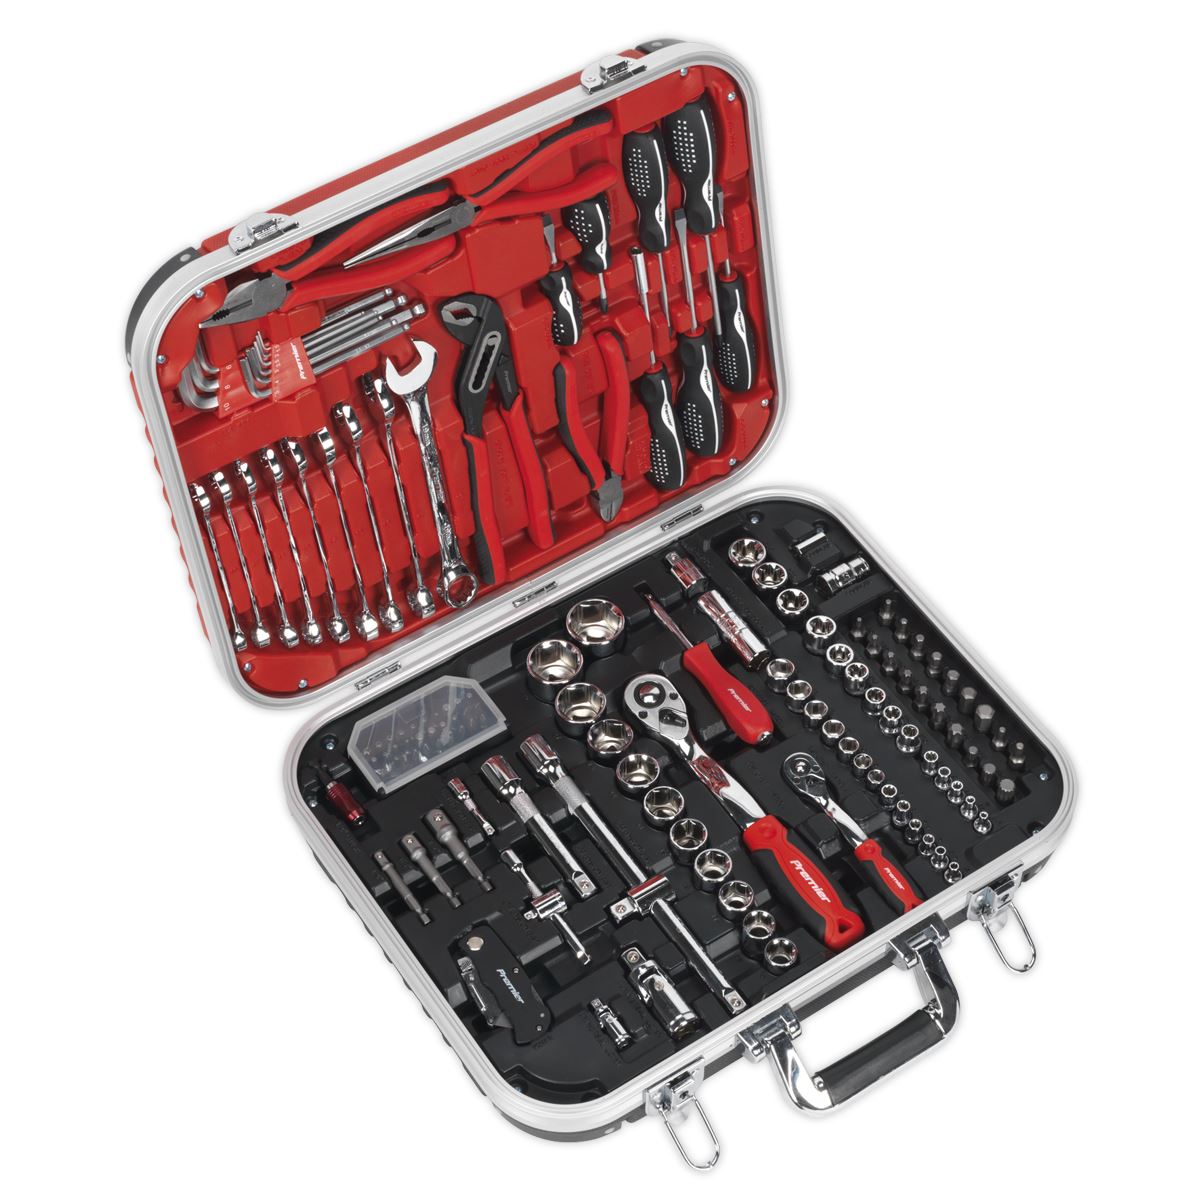 Sealey Premier Mechanic's Tool Kit 144pc